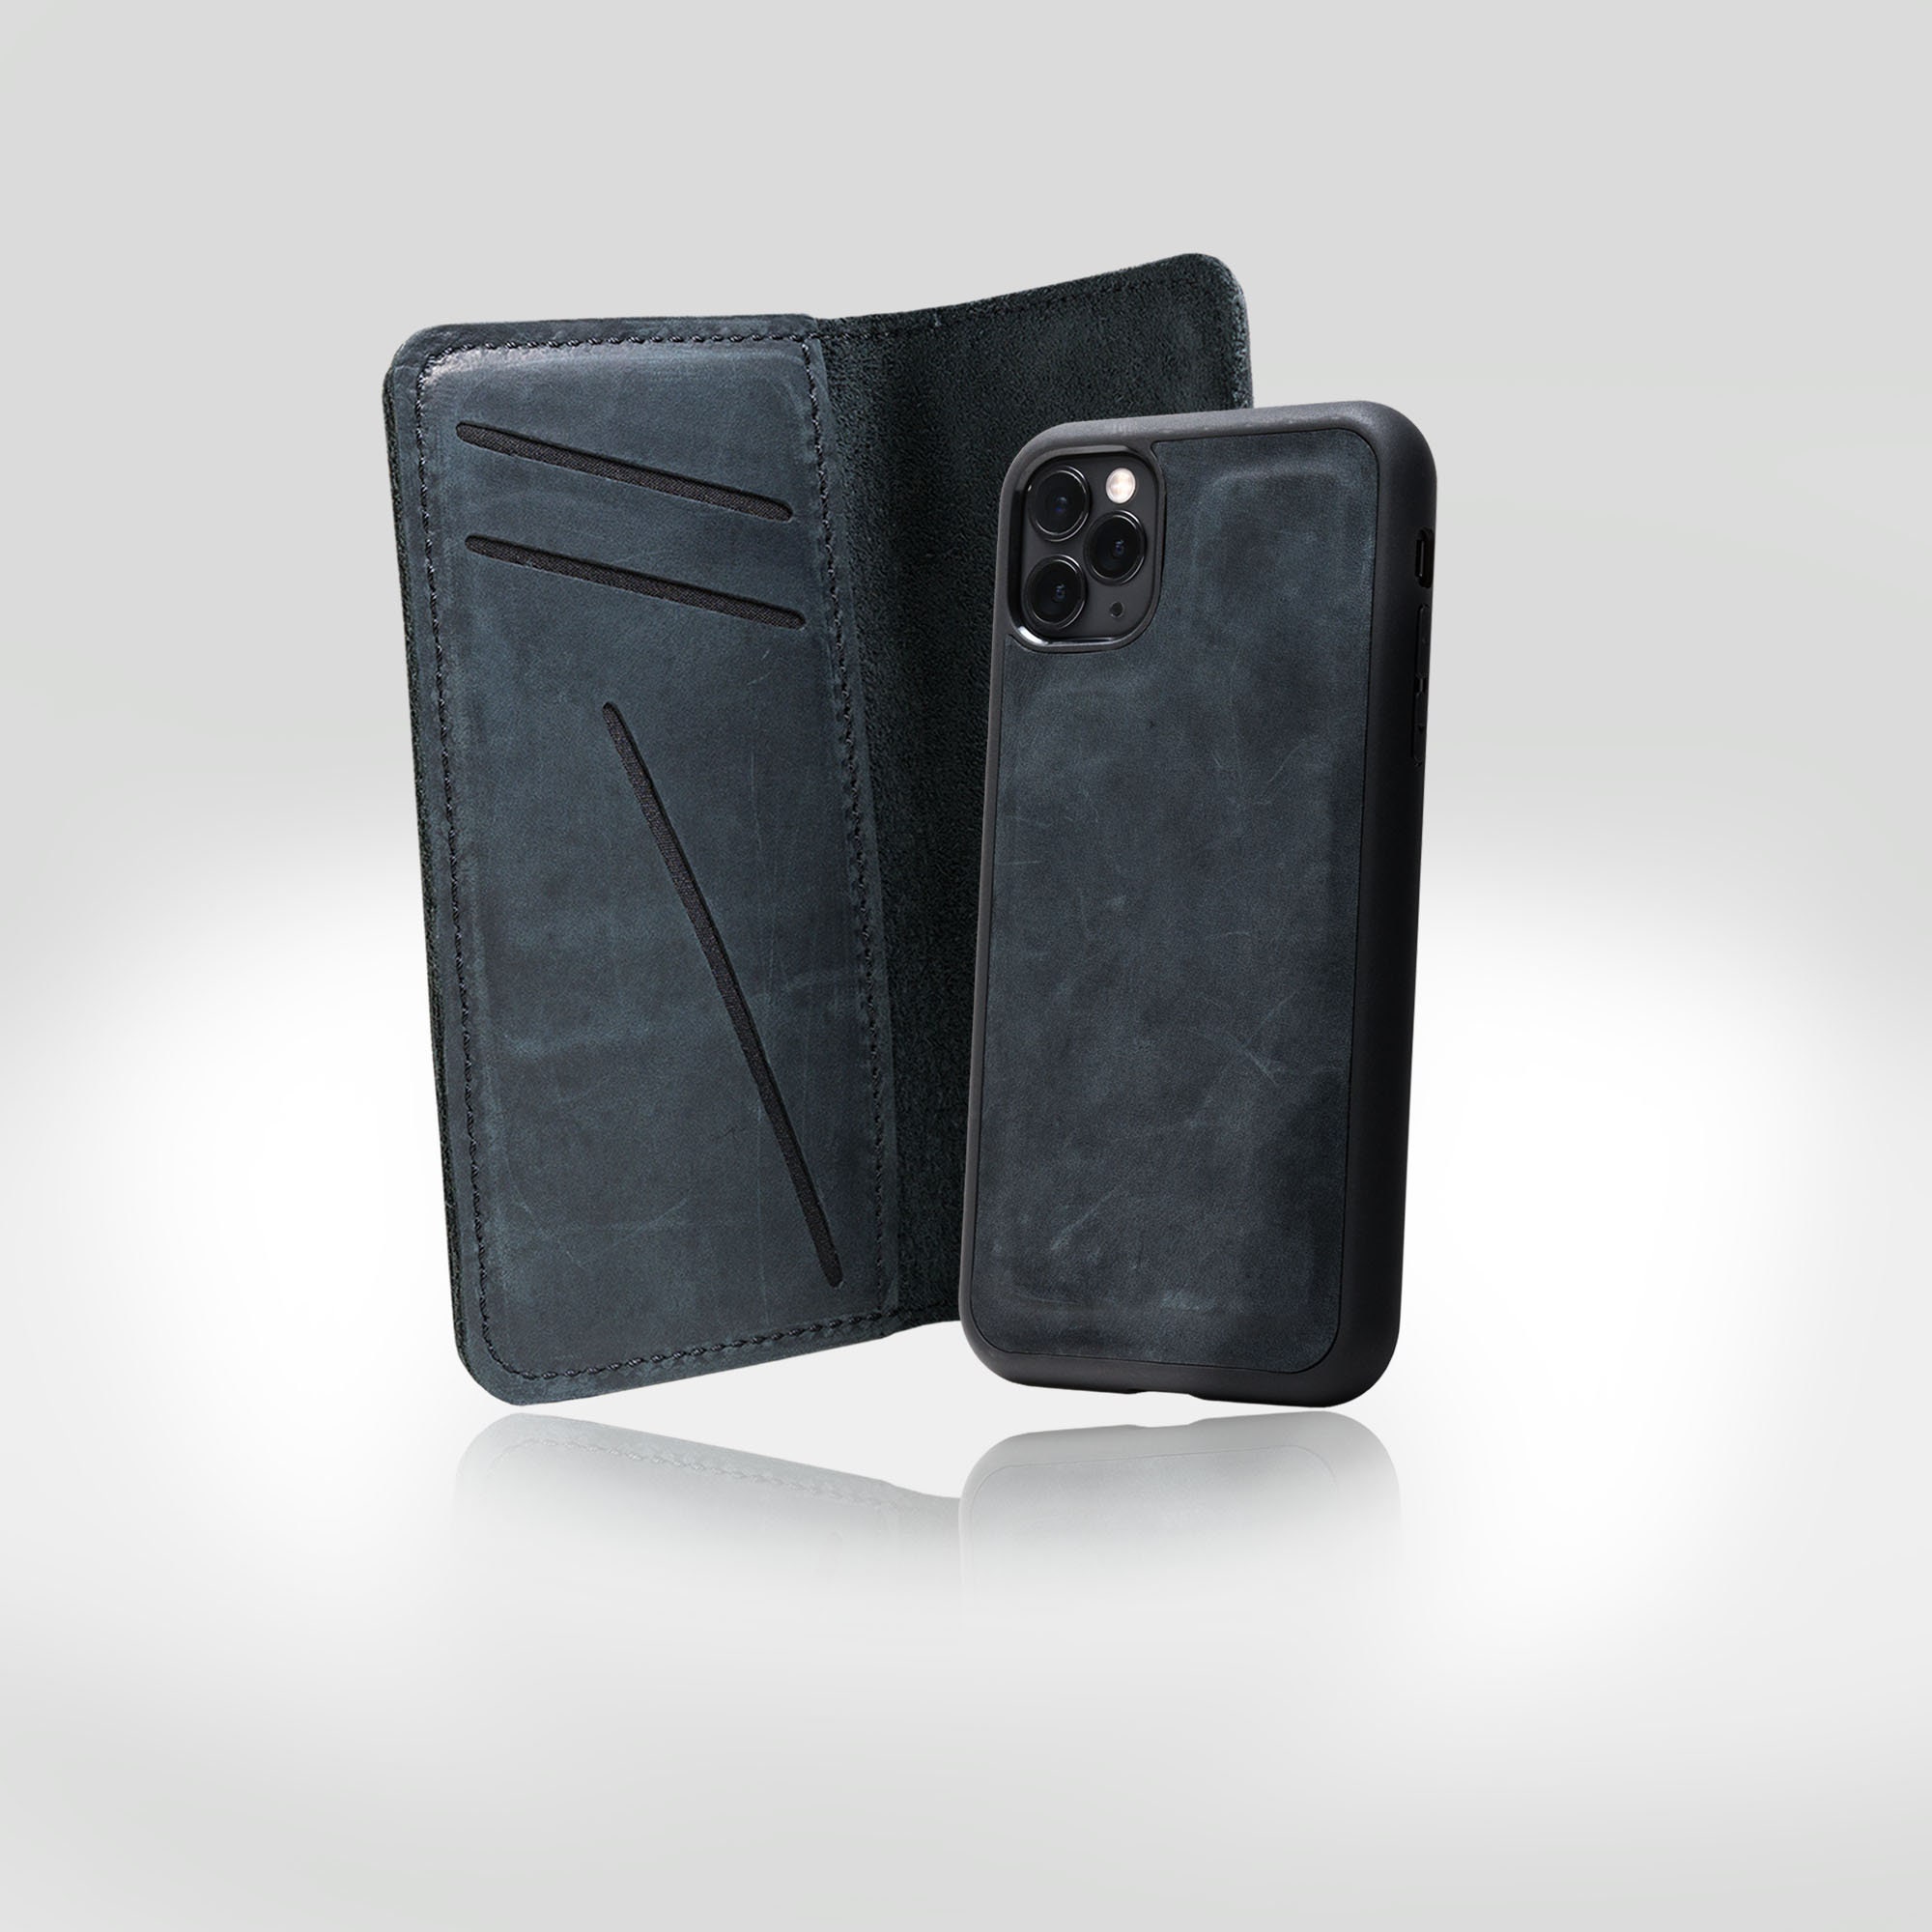 NEW** Michael Kors Logo Medium Notebook Black Grey Luxury Blank